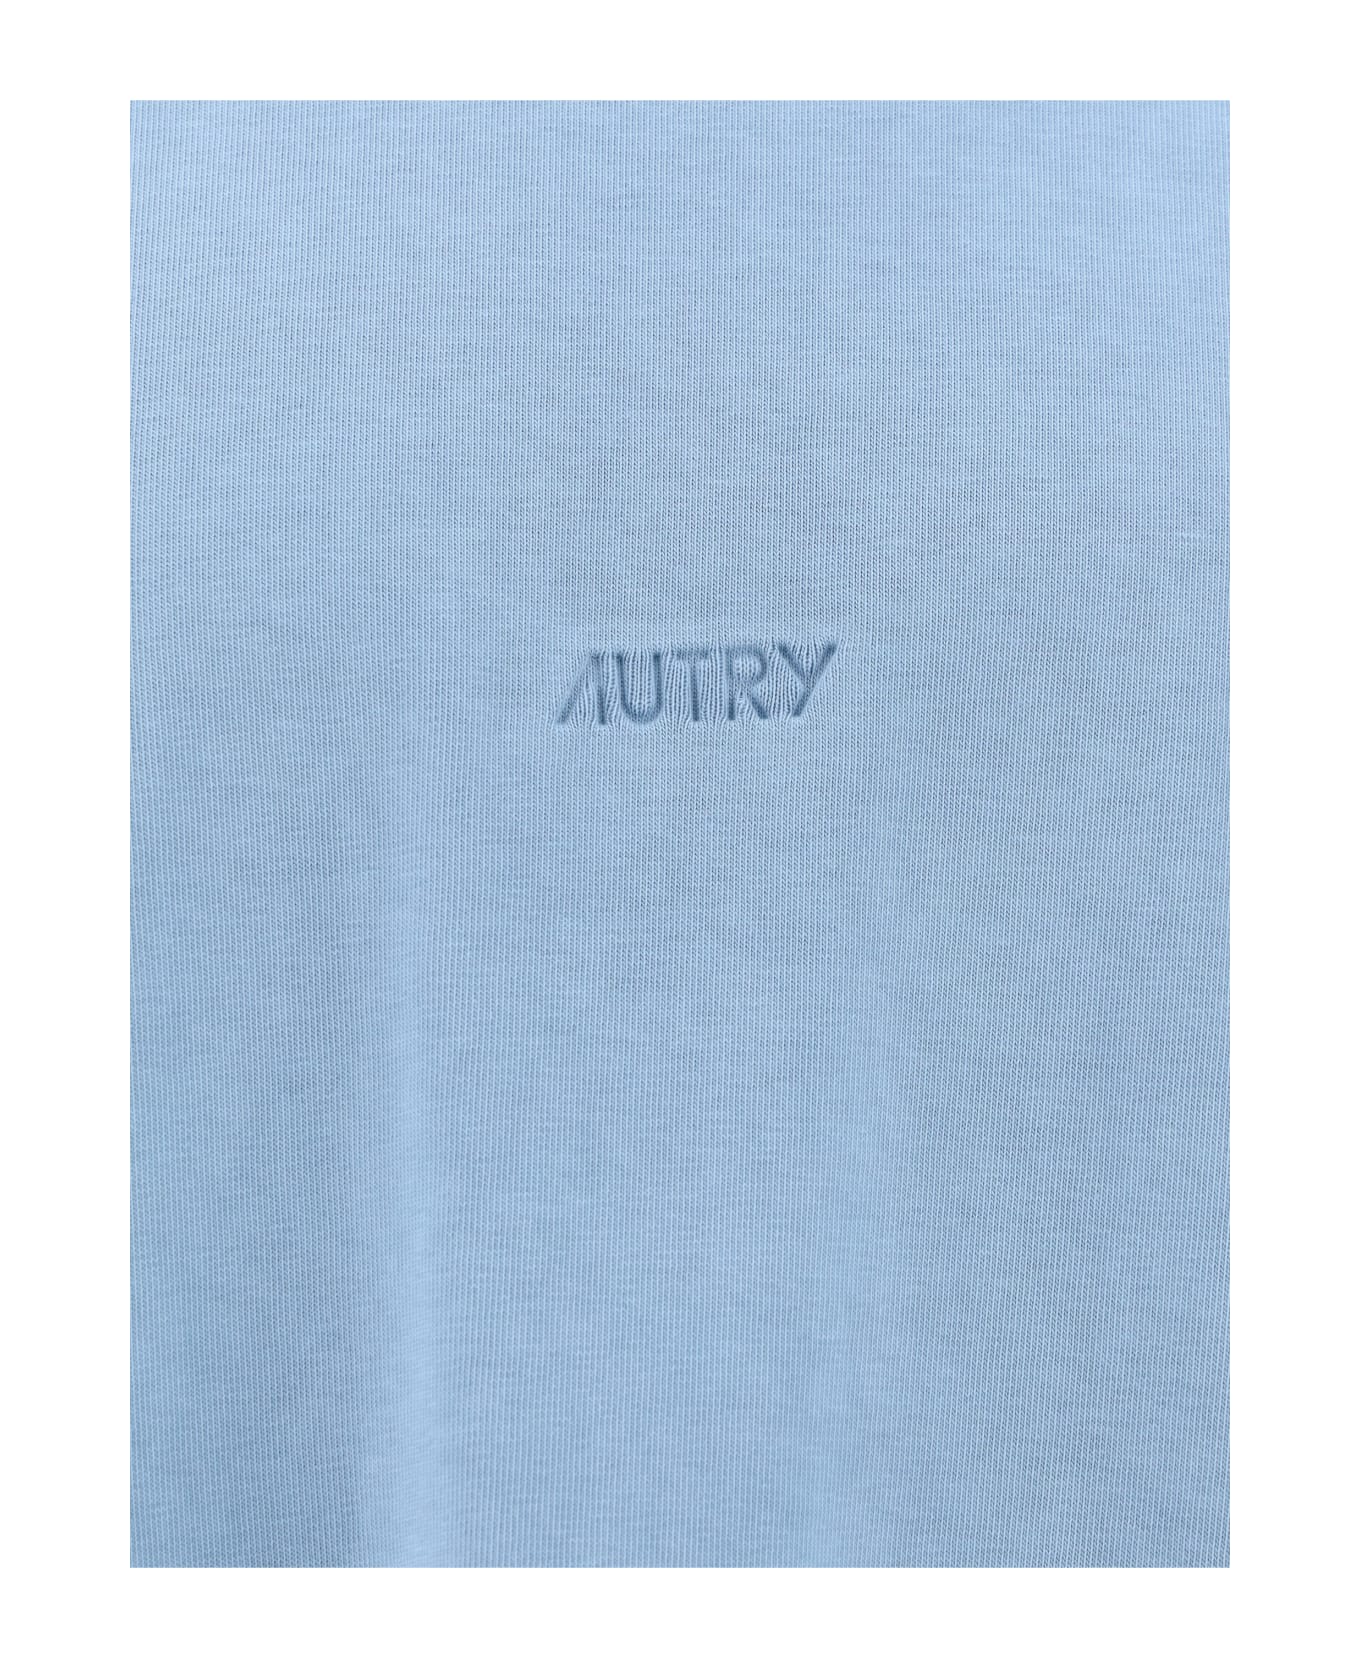 Autry T-shirt - Azzurro